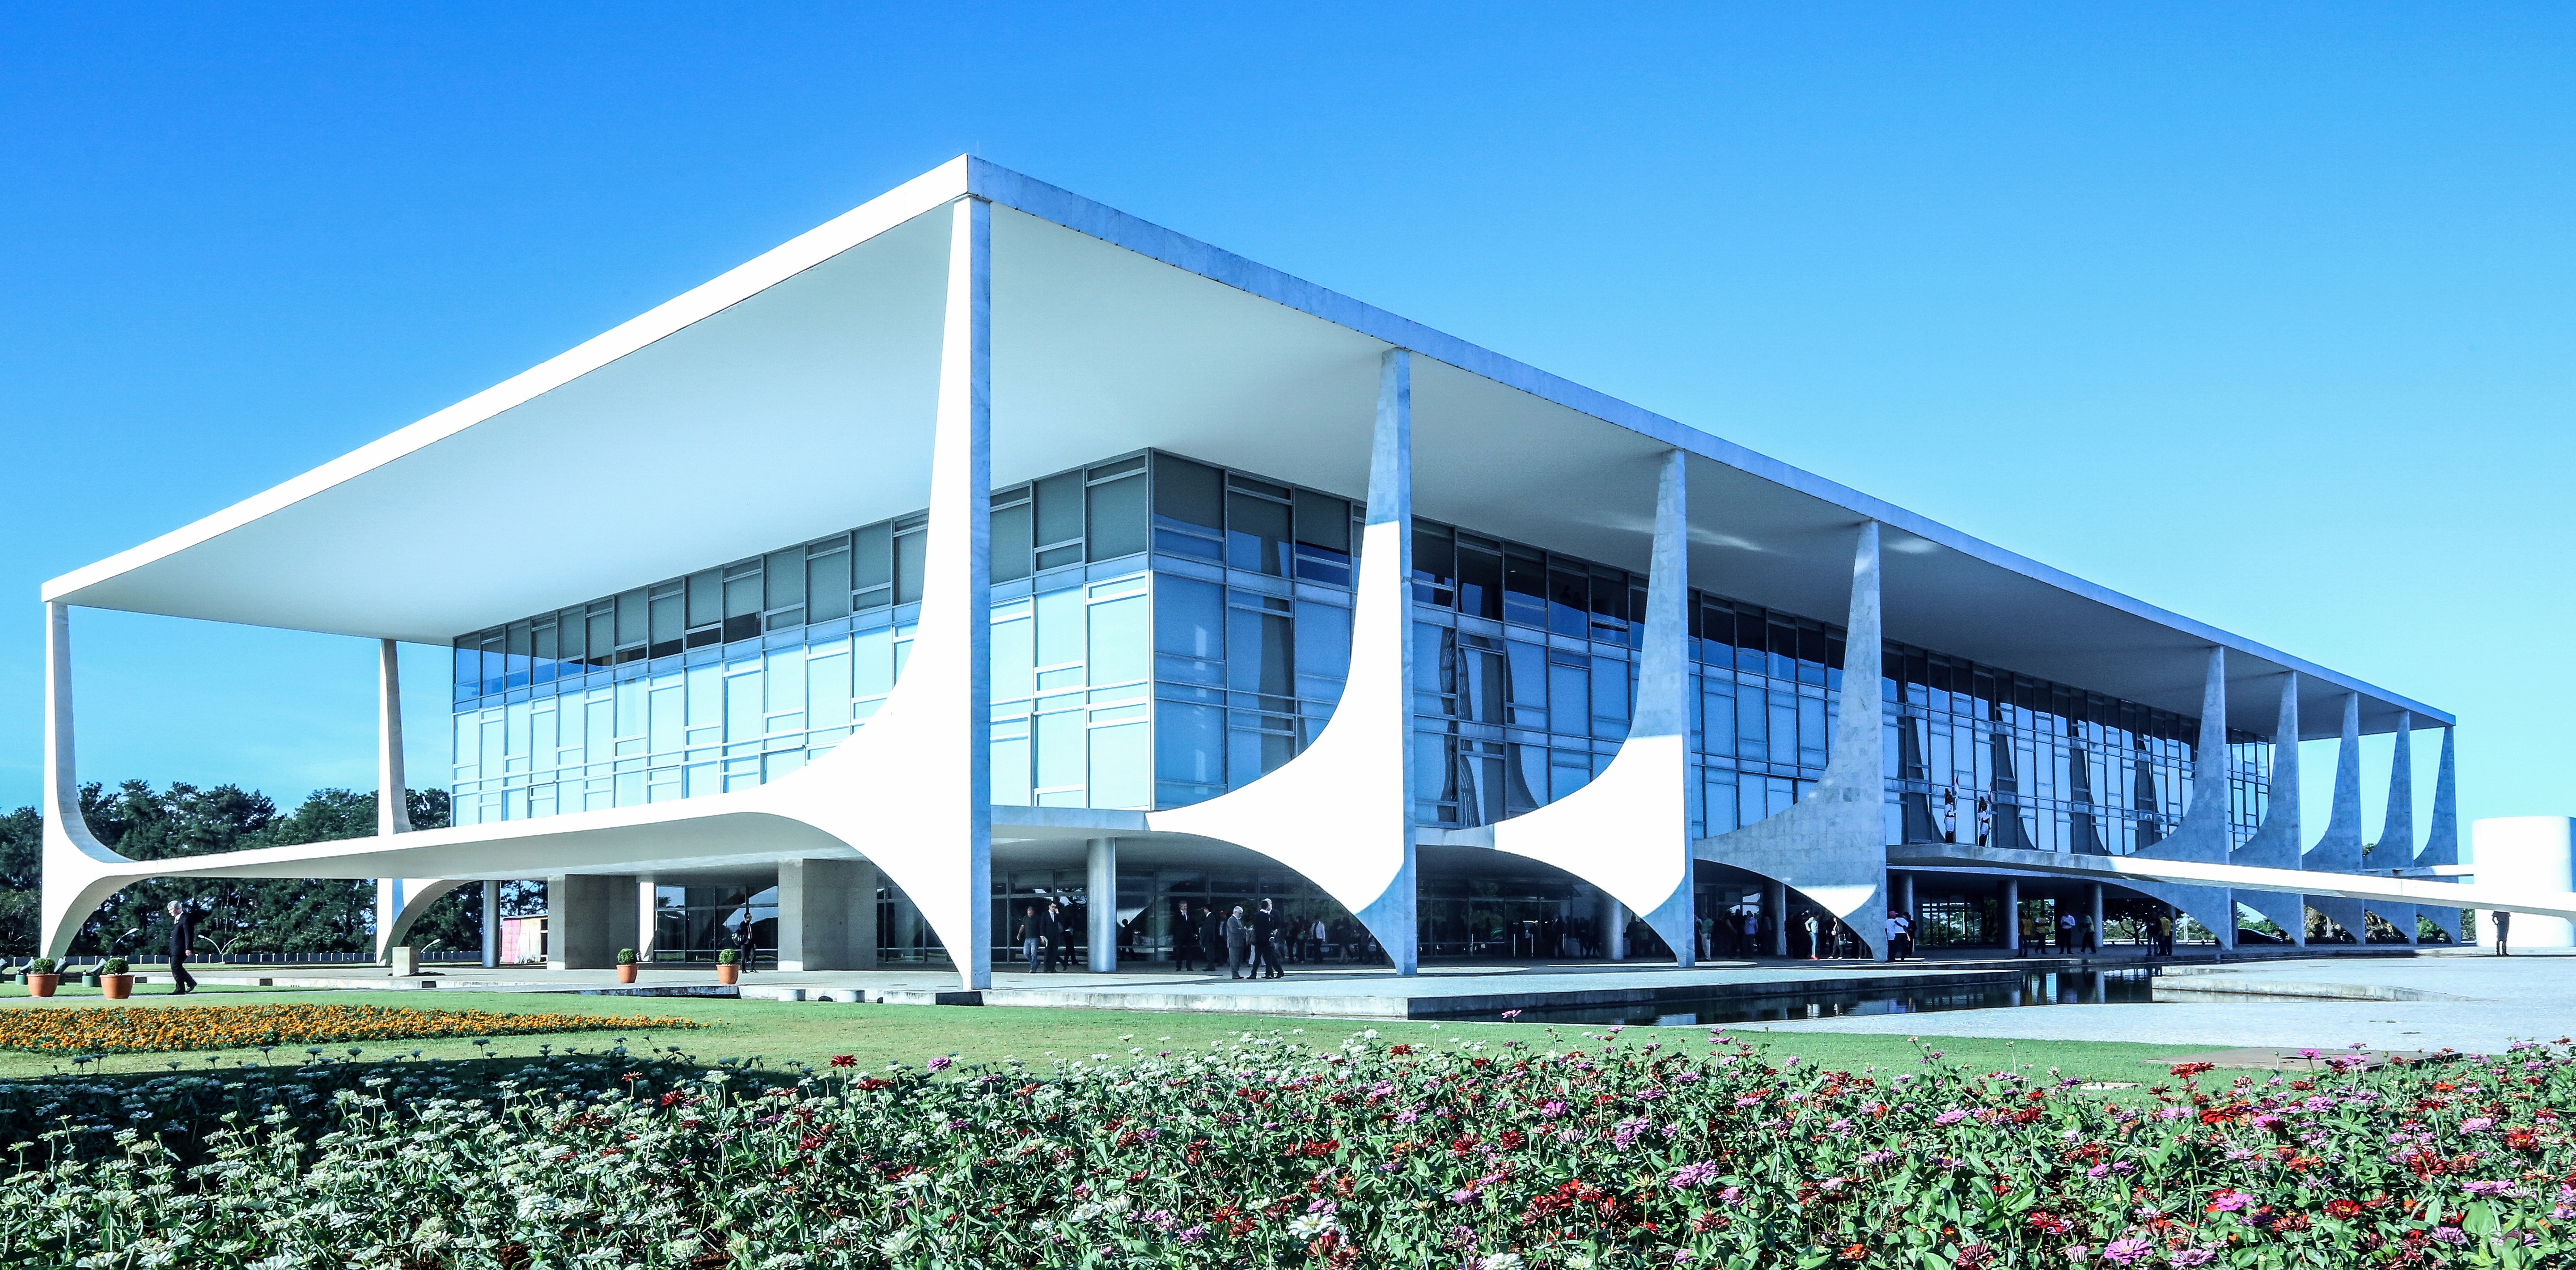 File:Planalto panorama.jpg - Wikimedia Commons